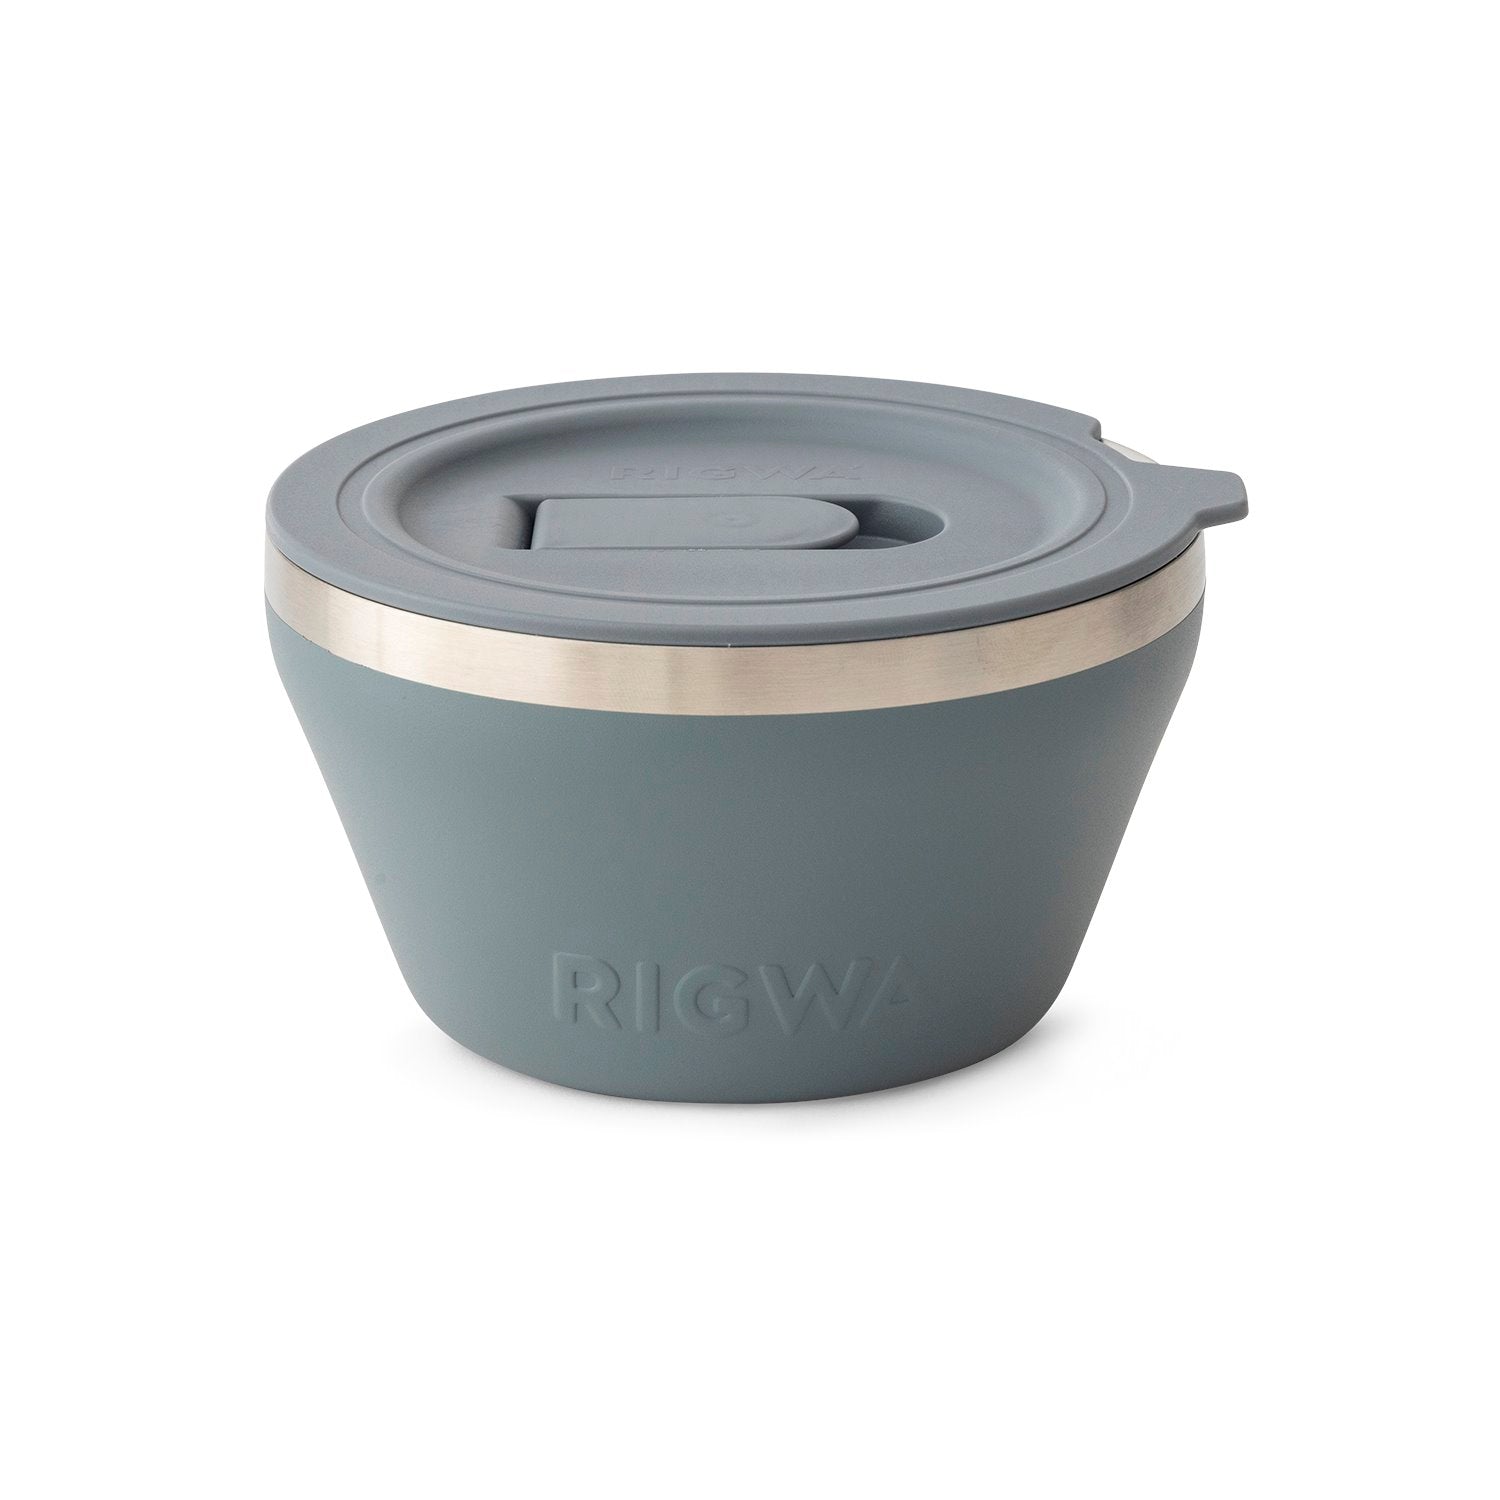 Fresh Bowl (20oz) Black - Insulated | Non-Toxic